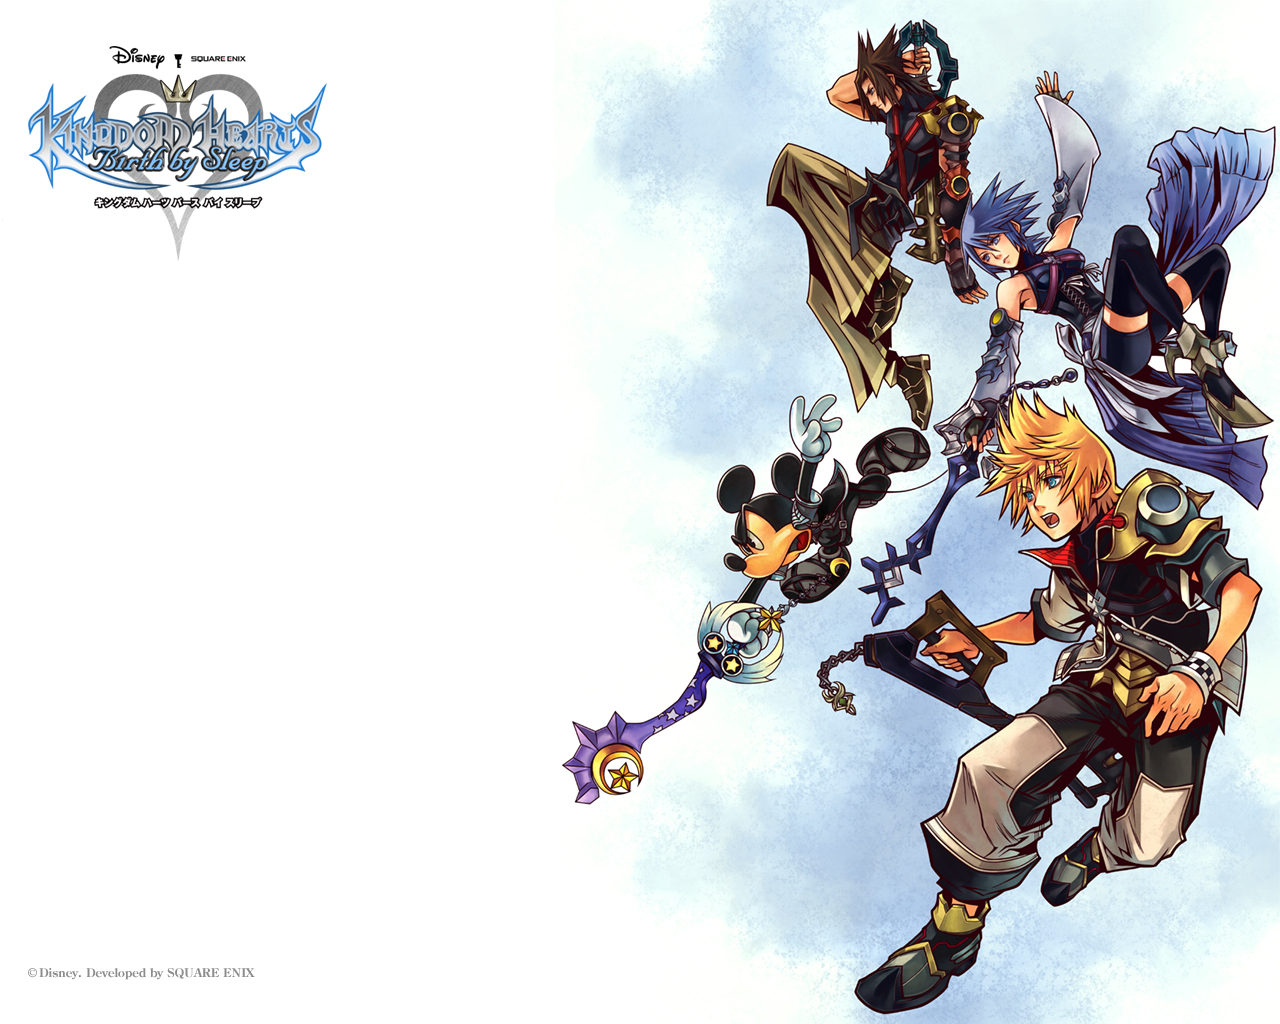 Fond Ecran Wallpaper Kingdom Hearts Birth By Sleep Jeuxvideo Fr